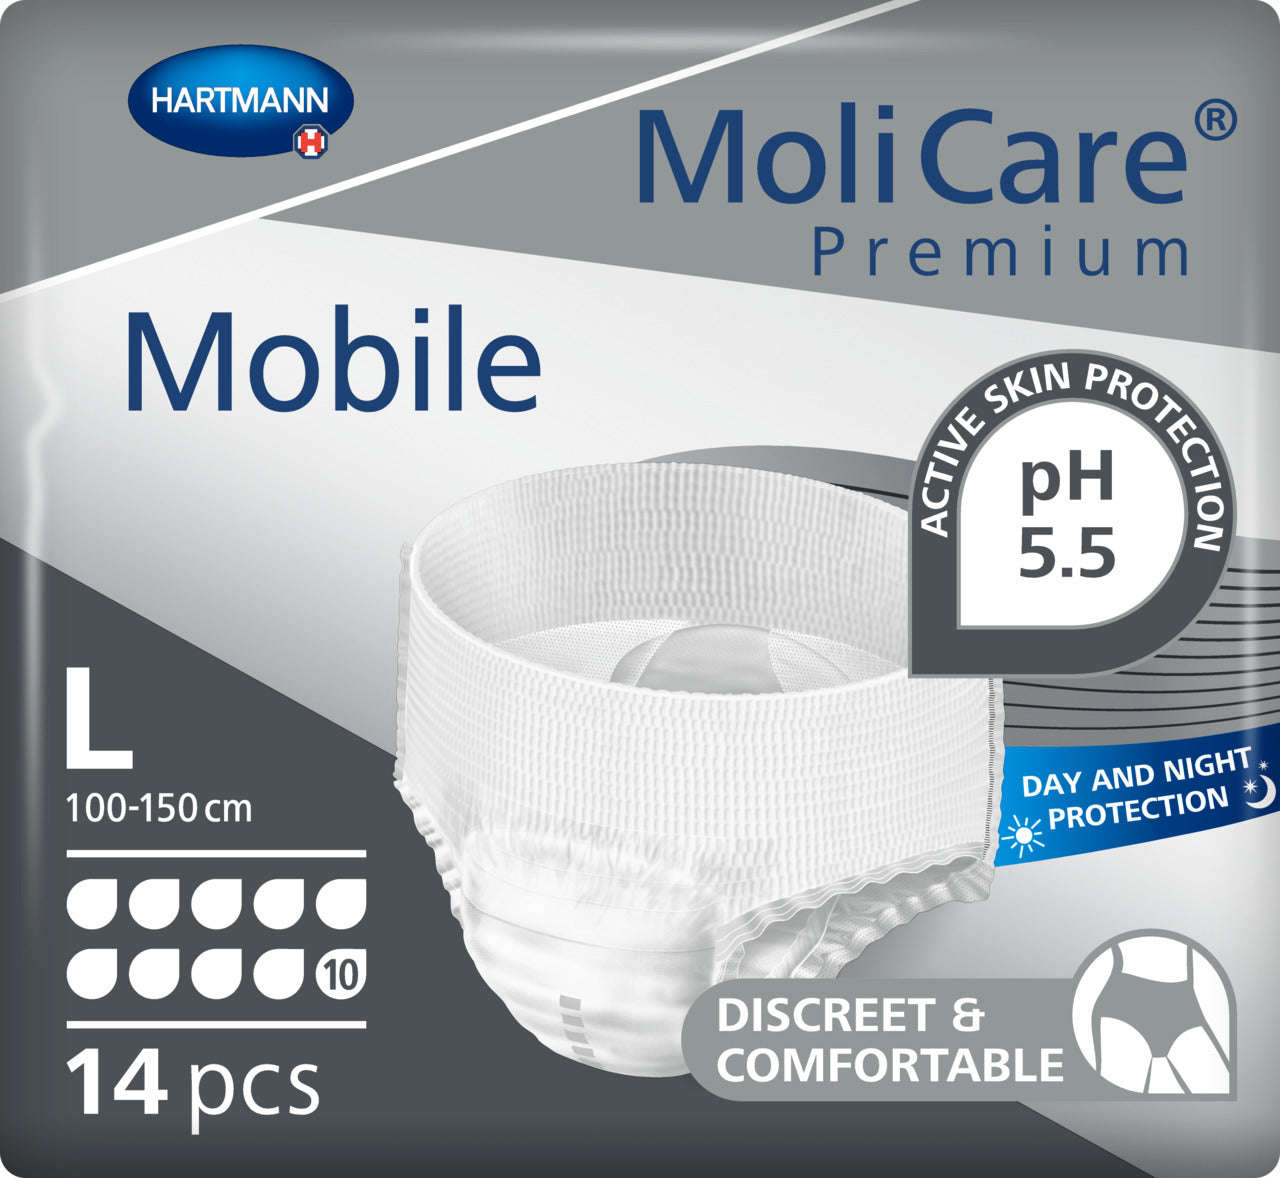 MoliCare Premium Mobile 10 Drop